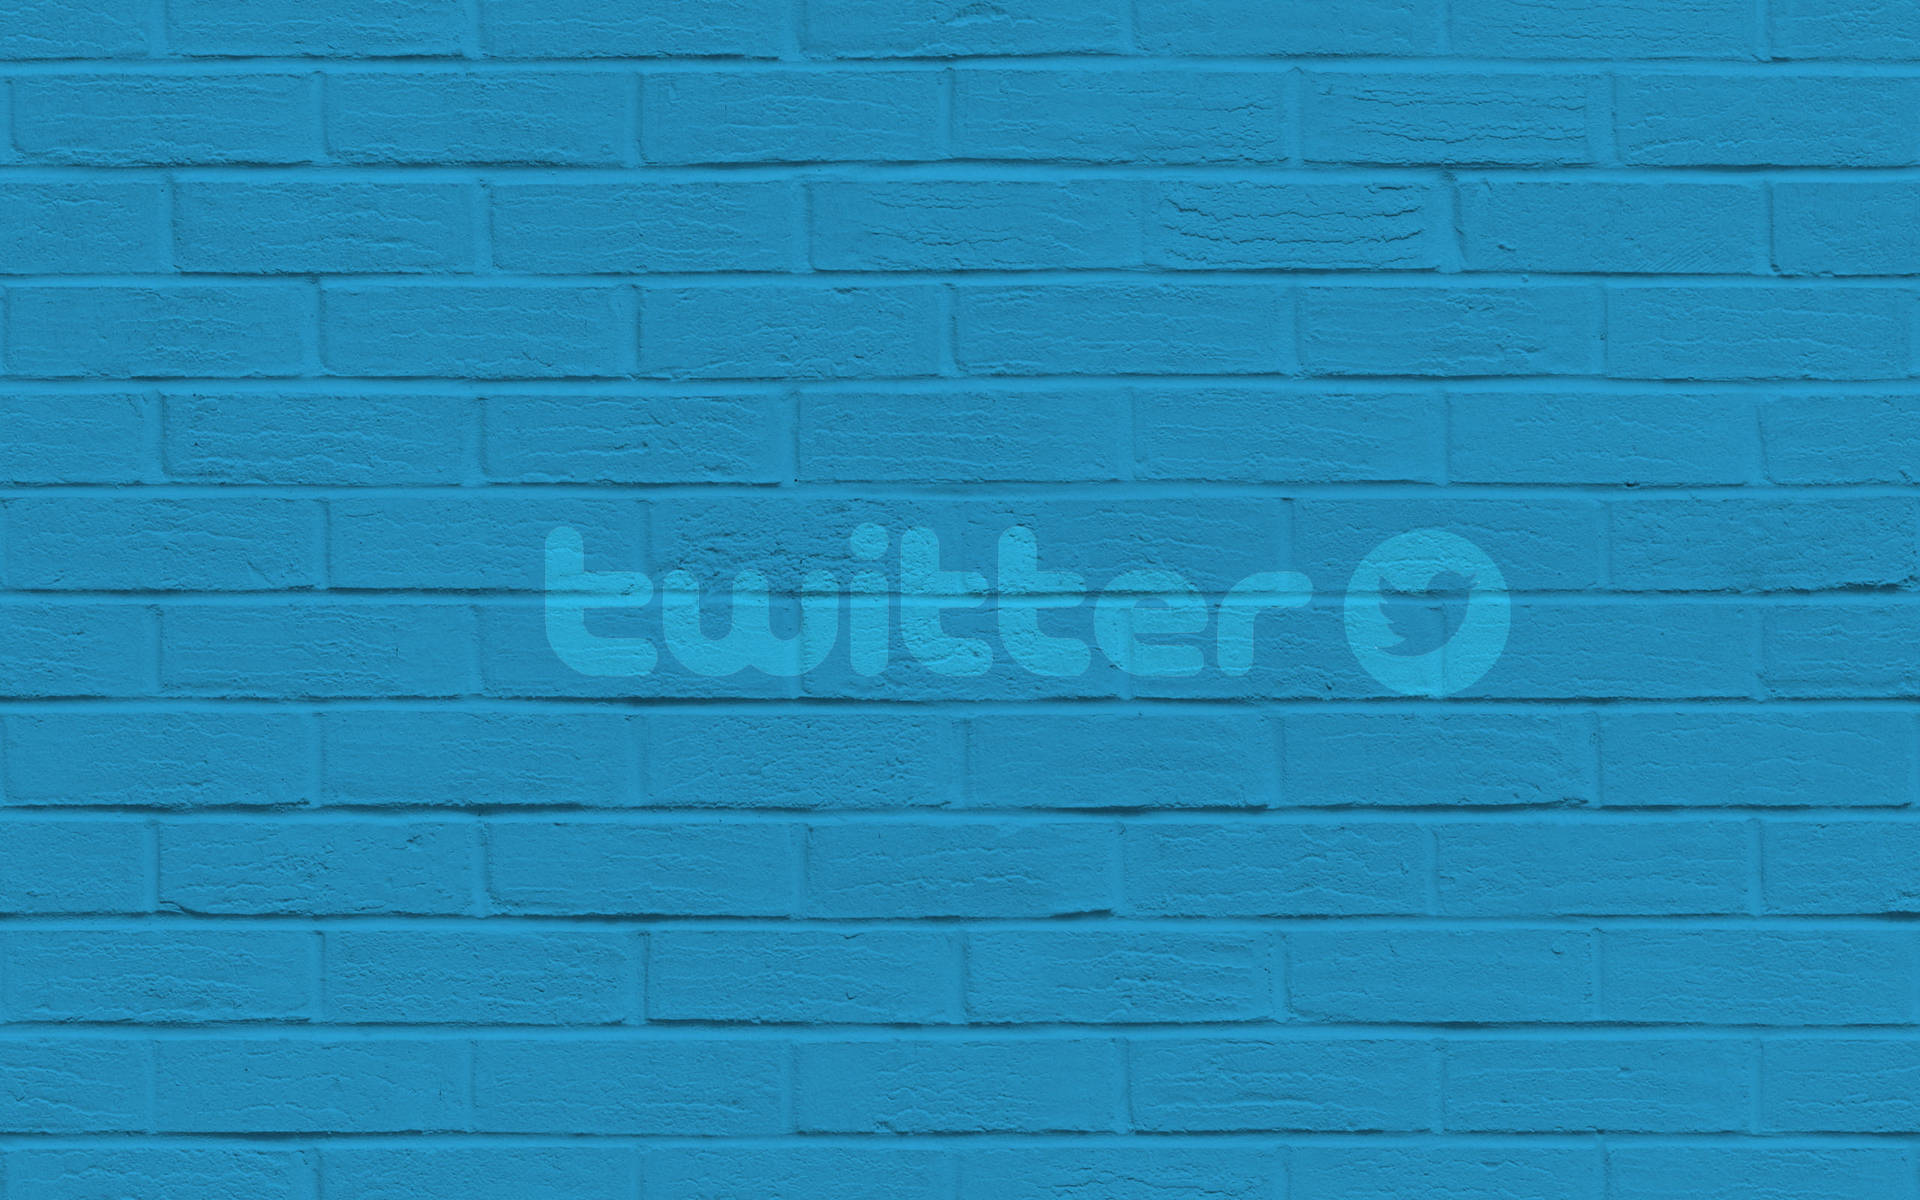 Twitter Brick Wall Background